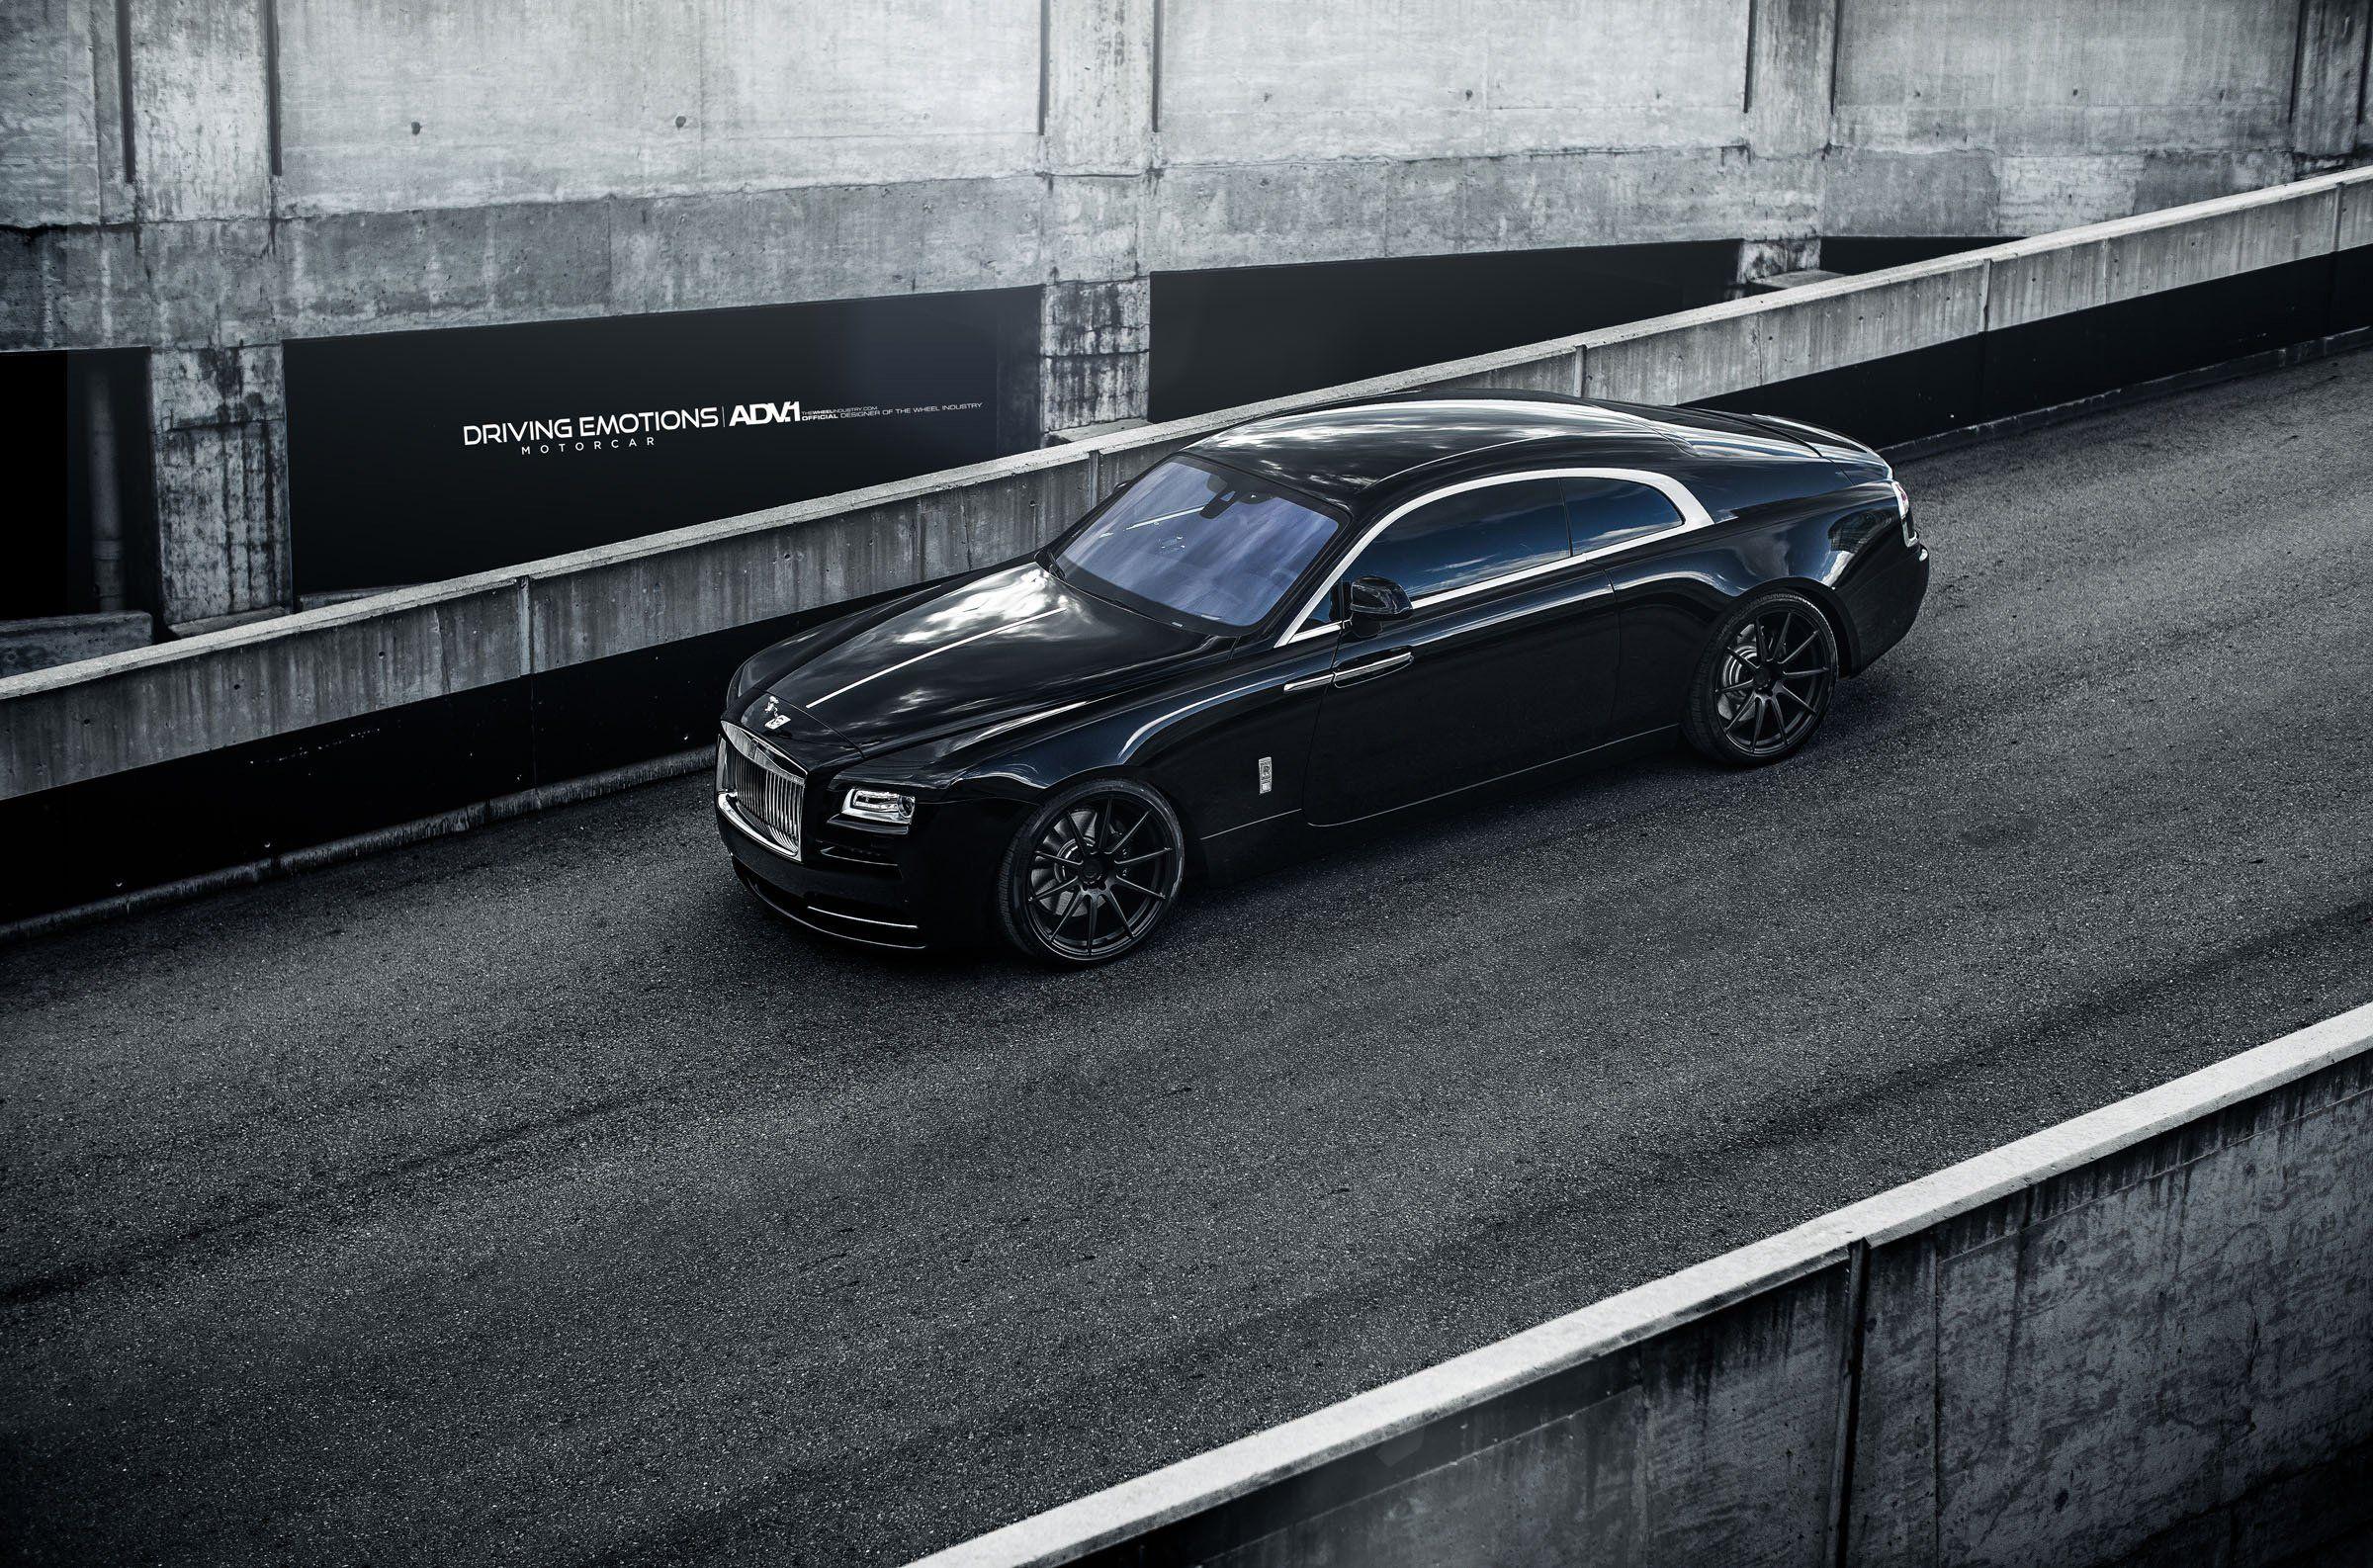 ROLLS ROYCE WRAITH cars luxury adv1 wheels black wallpaper